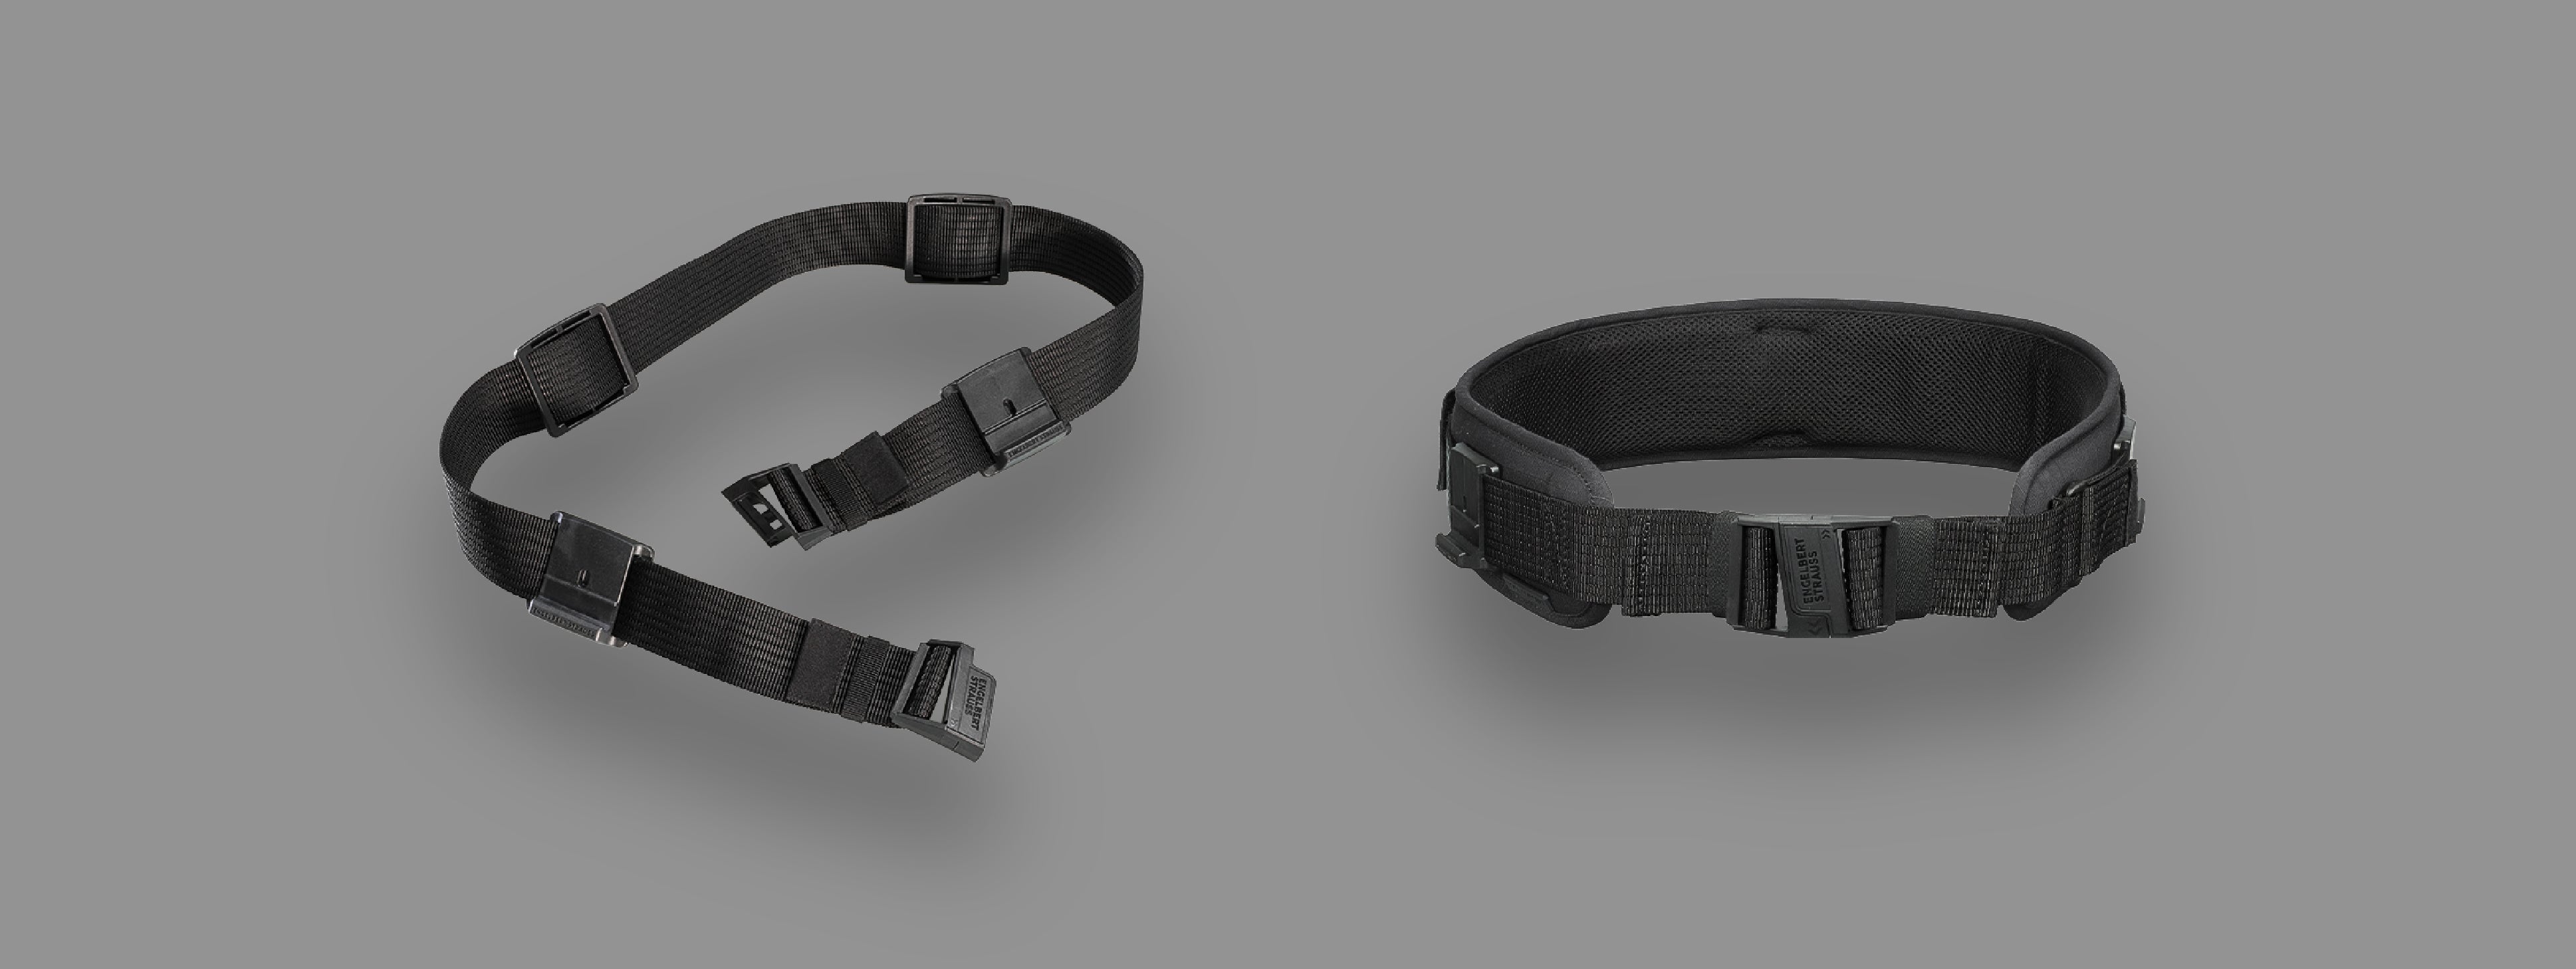 e.s.tool concept belts